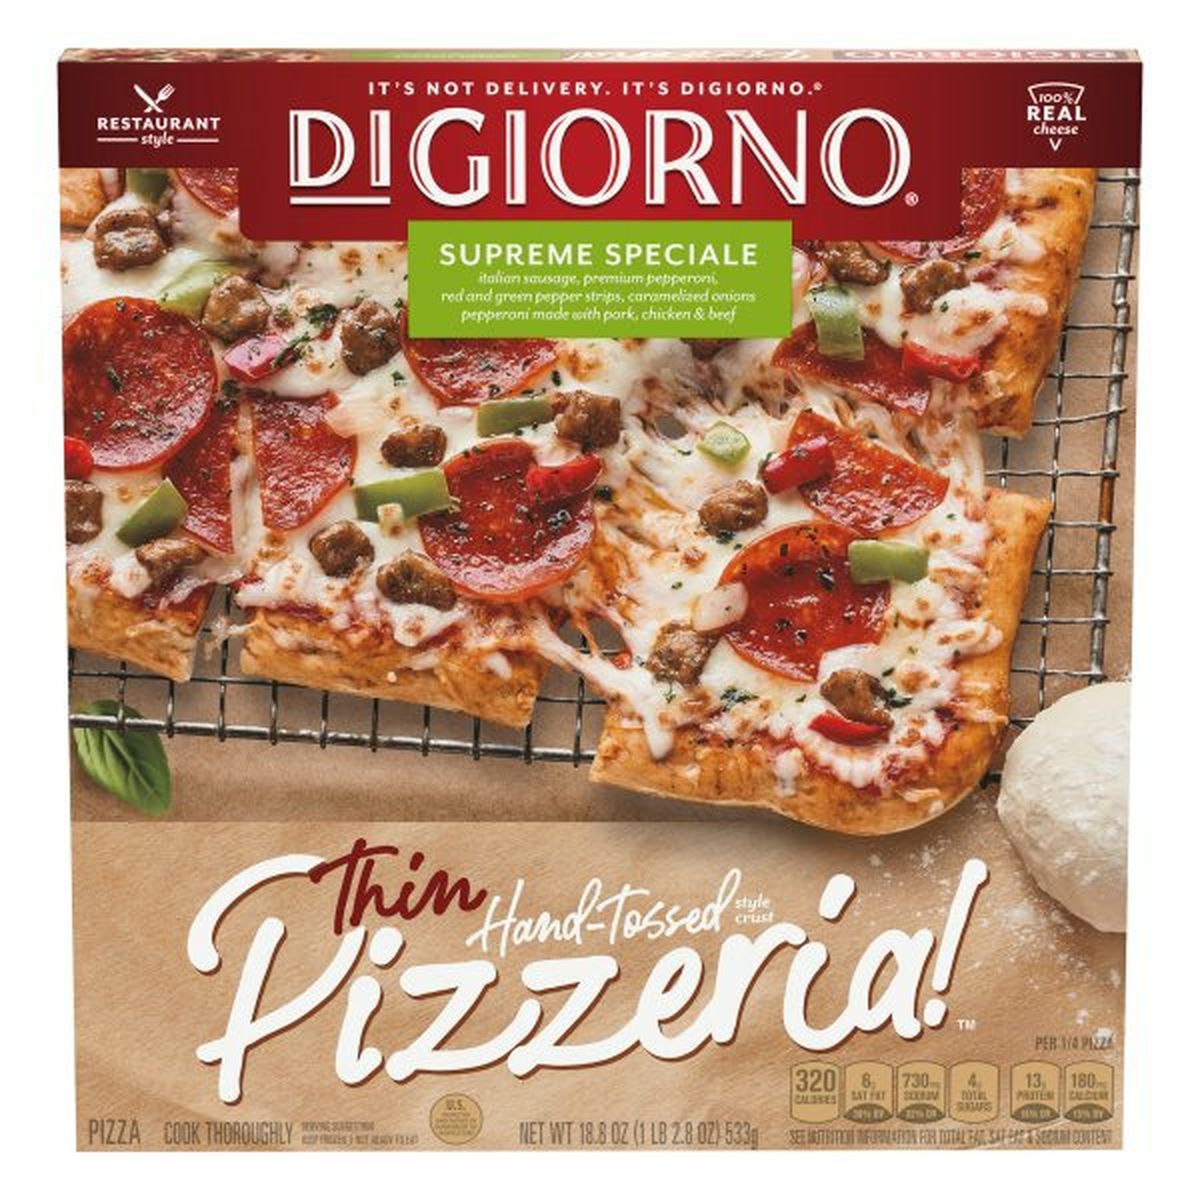 Calories in DiGiorno Pizzeria! Pizza, Hand-Tossed Style Crust, Supreme Speciale, Thin